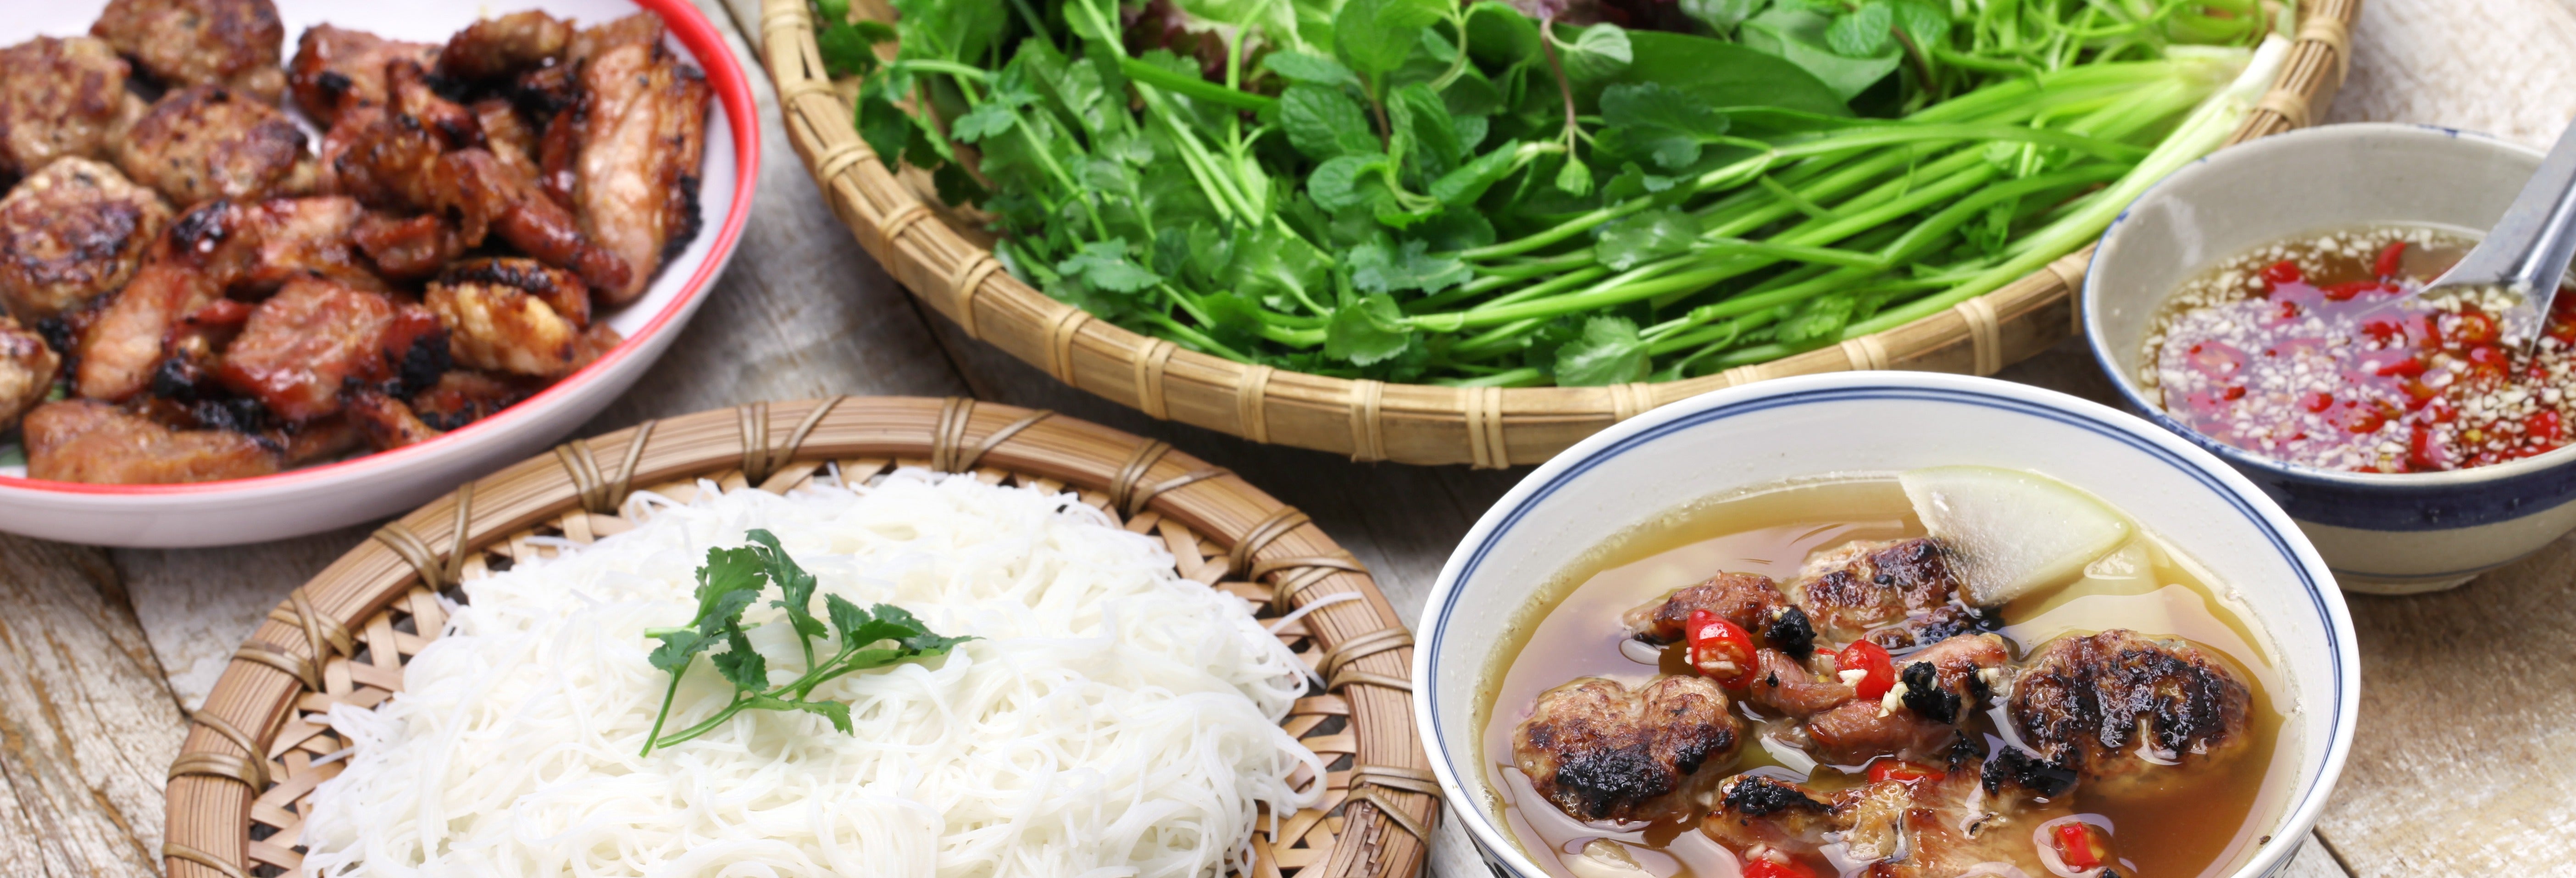 Tour gastronômico por Hanói